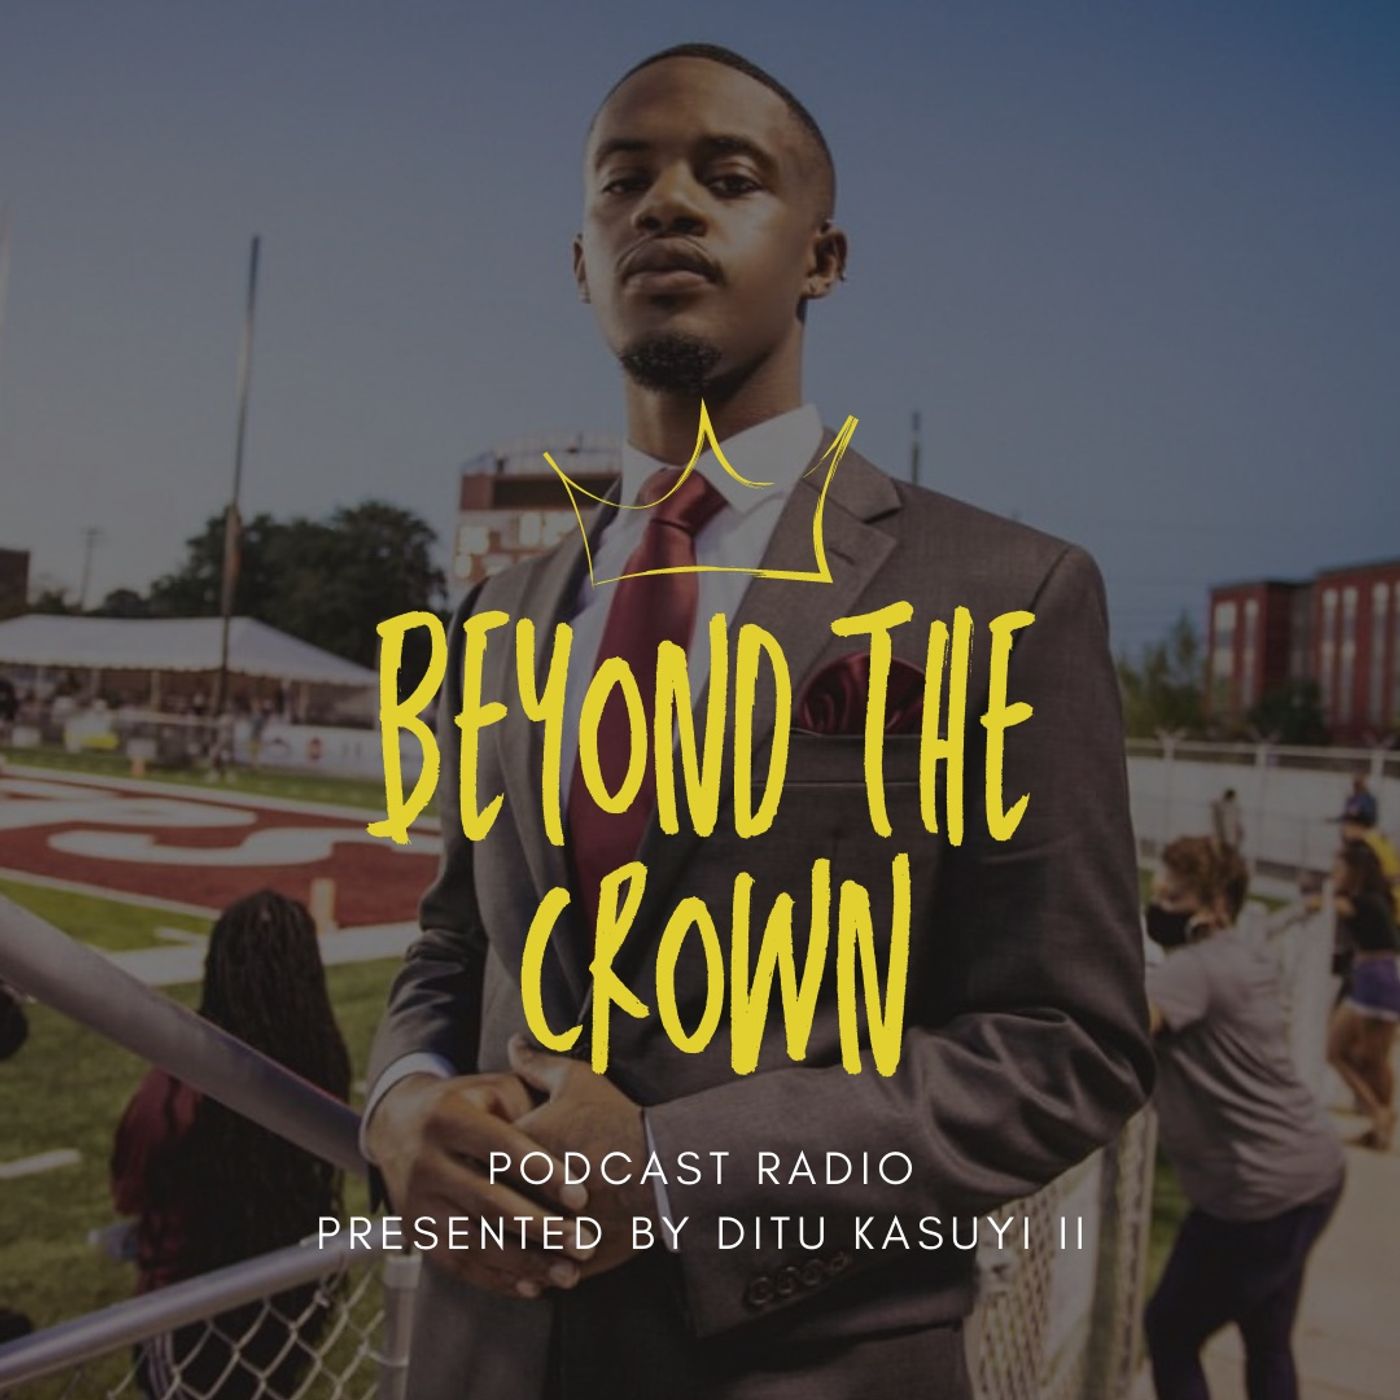 Beyond The Crown